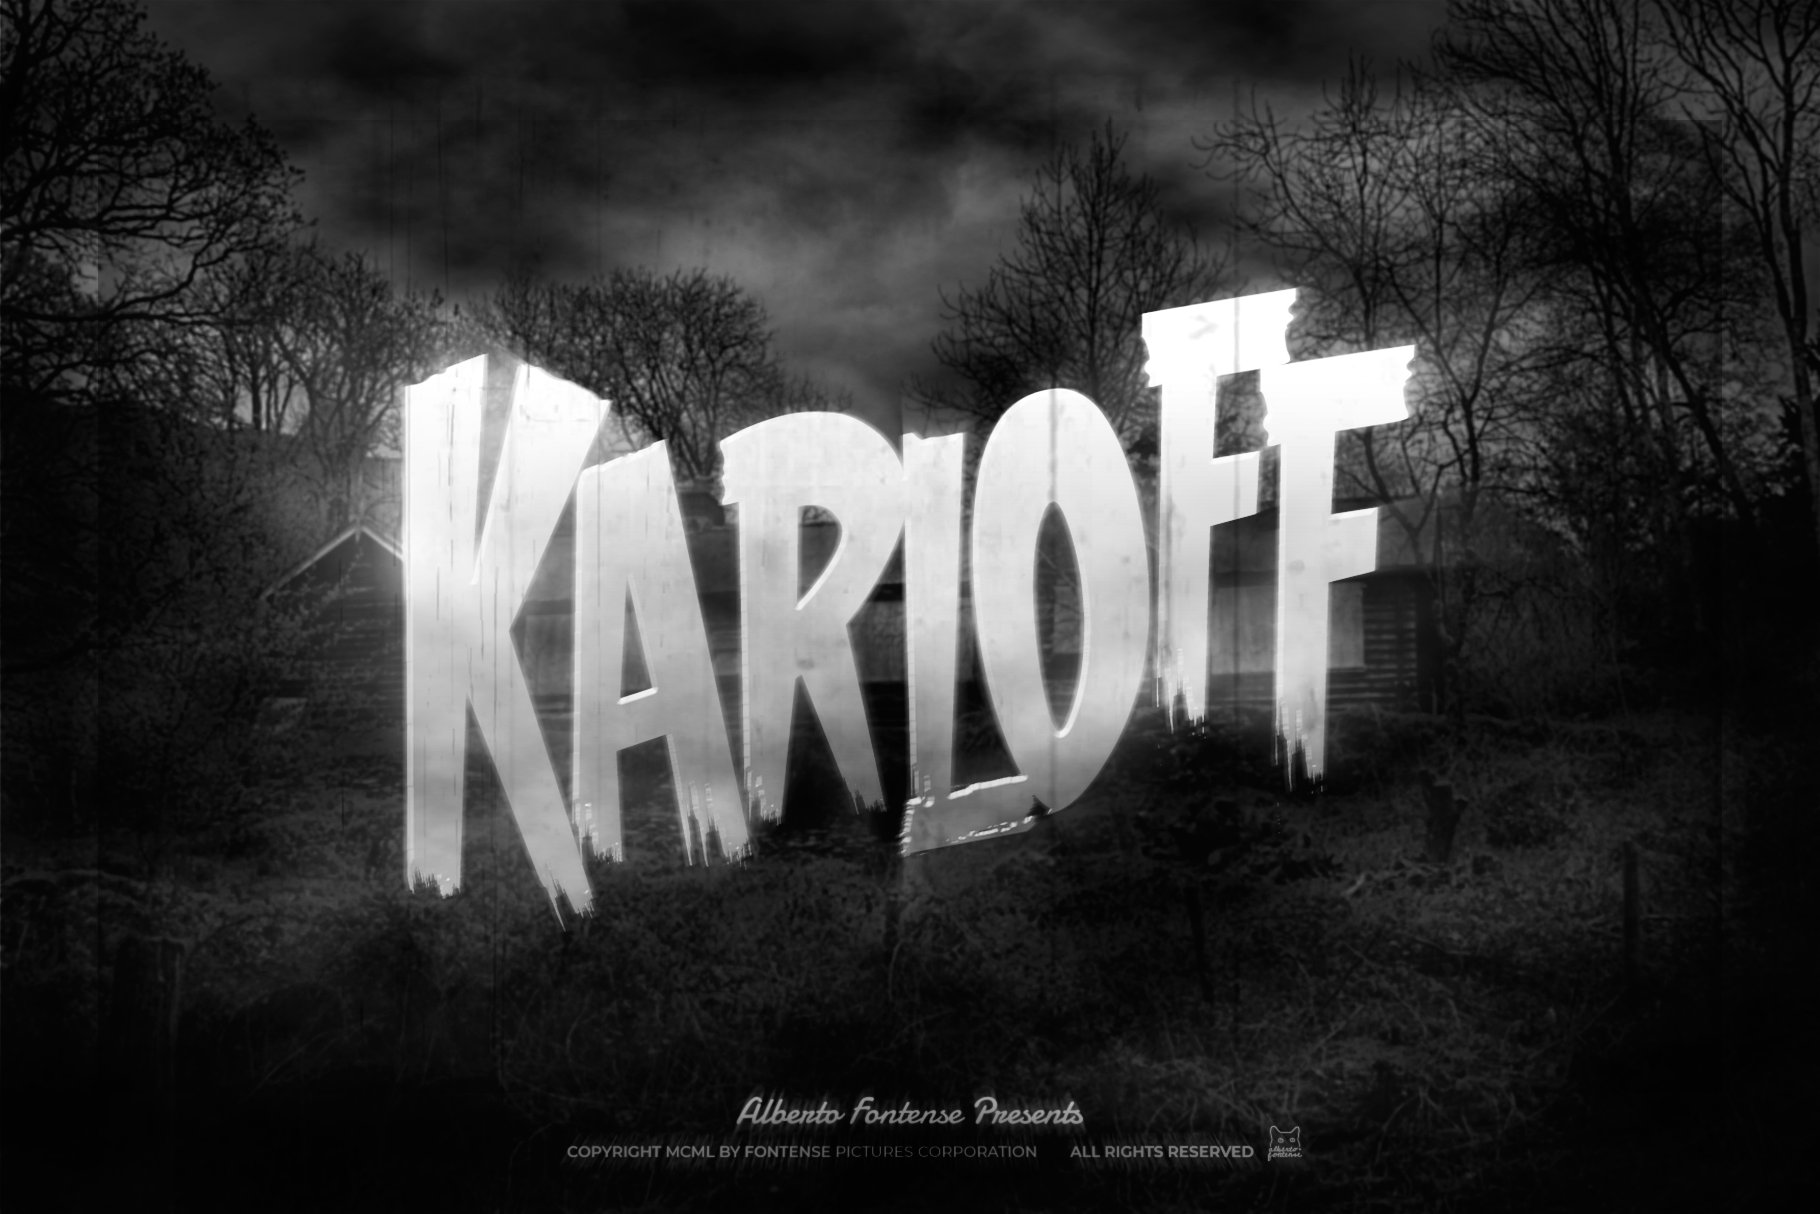 Karloff - Halloween Horror Font cover image.